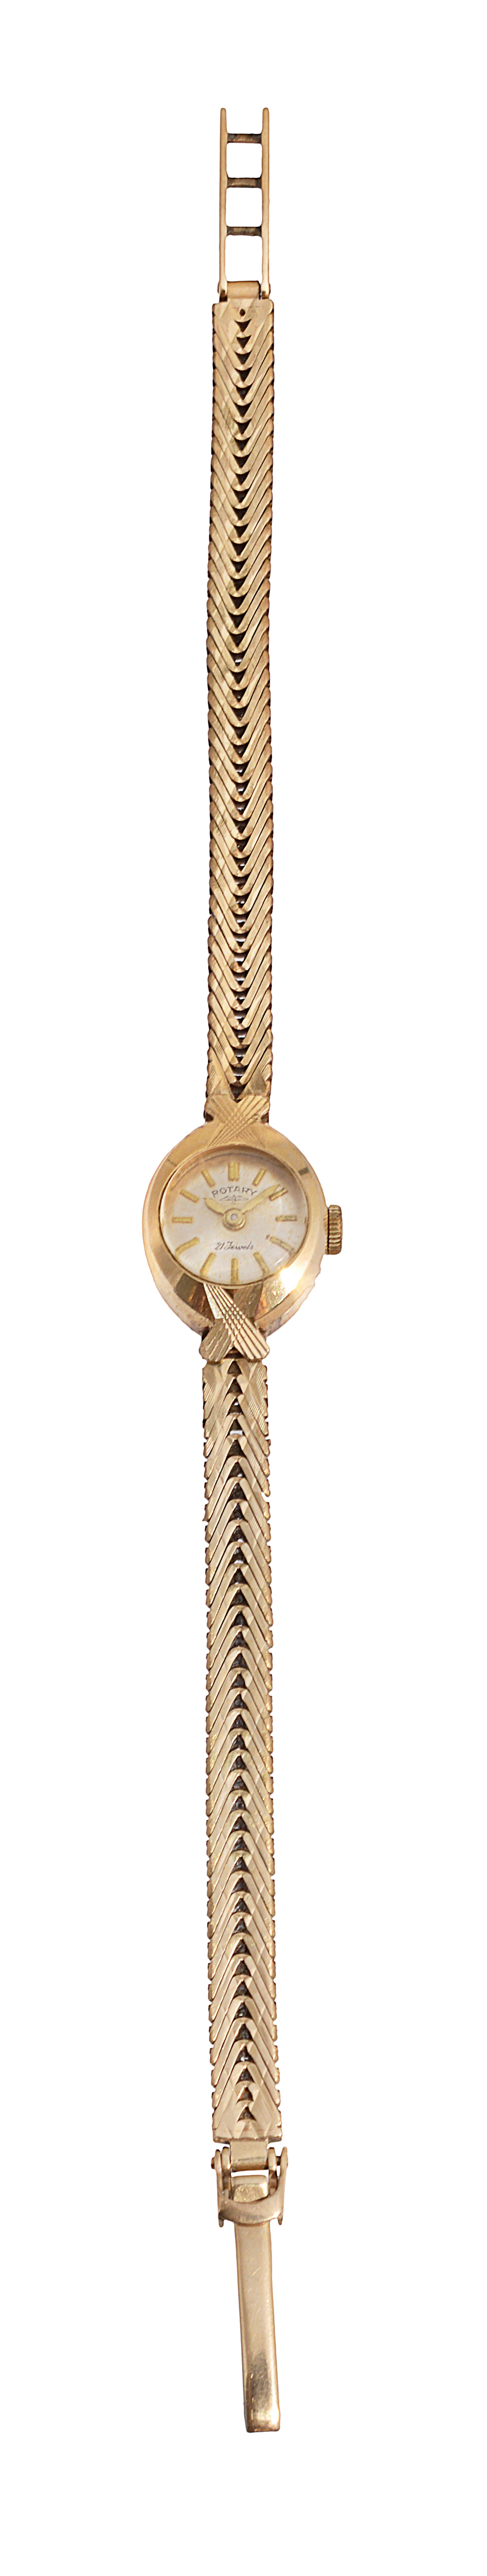 A 9ct gold Rotary manual wind ladies bracelet wristwatch